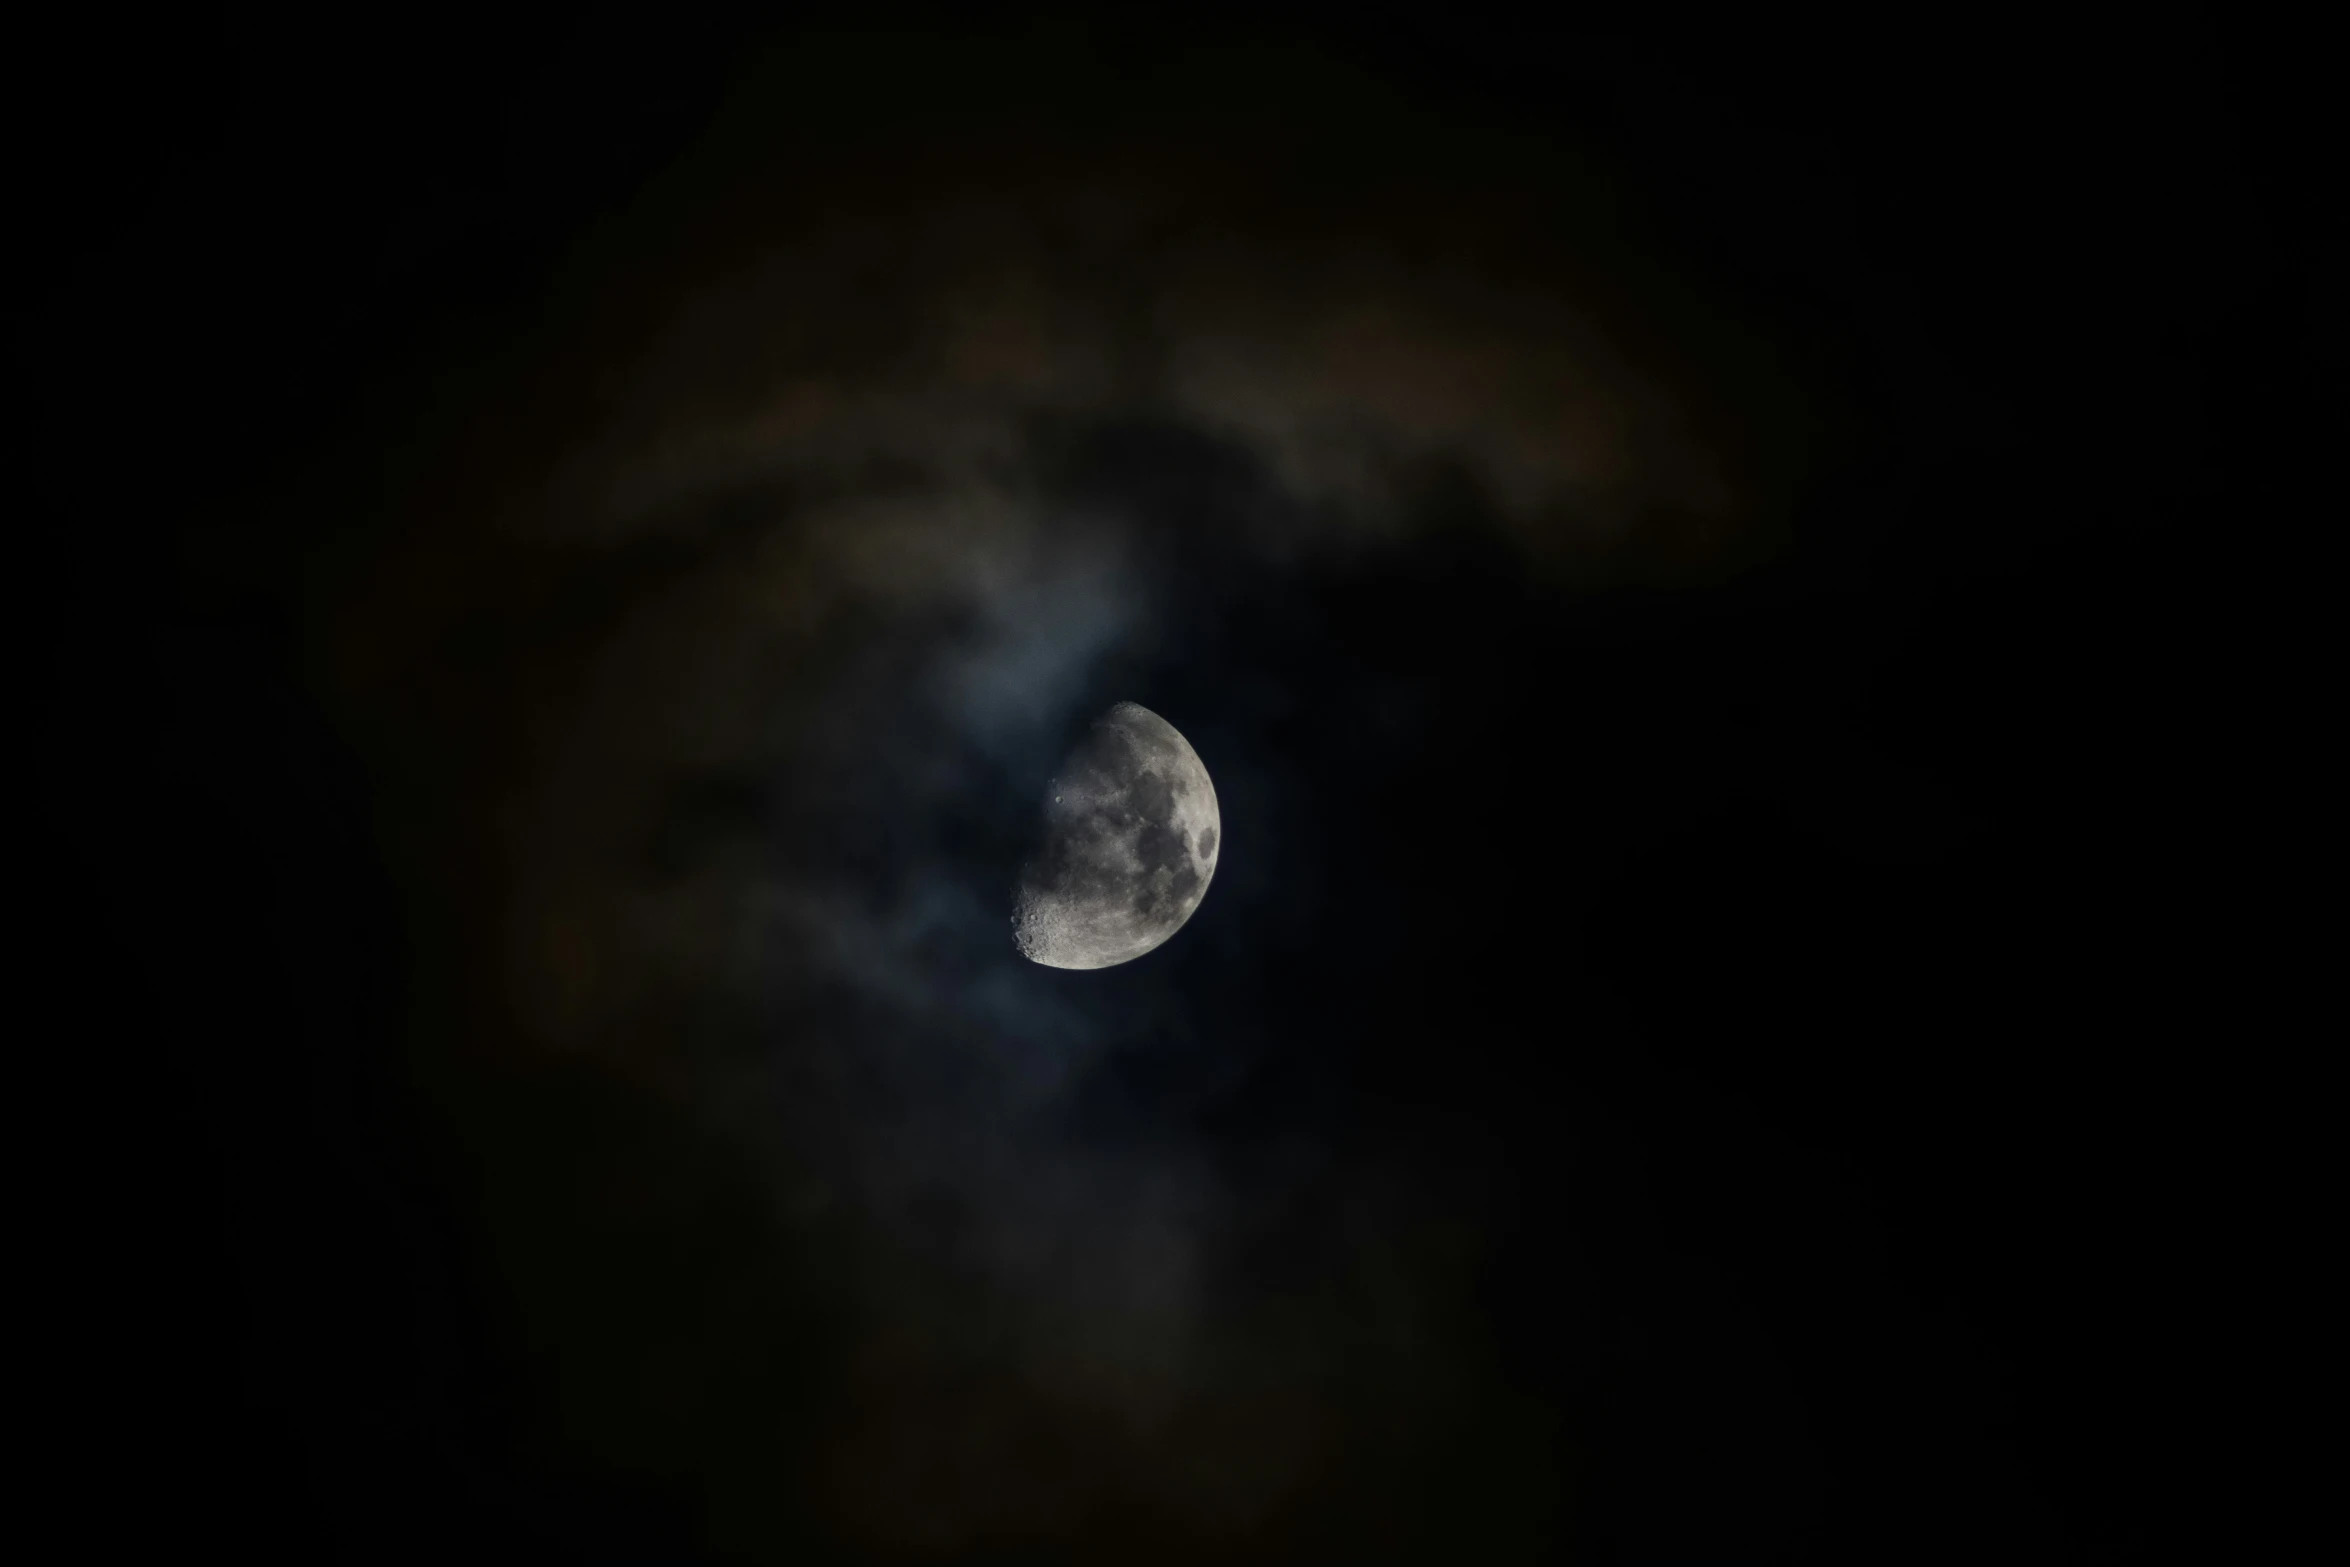 the moon is seen through a cloudy sky